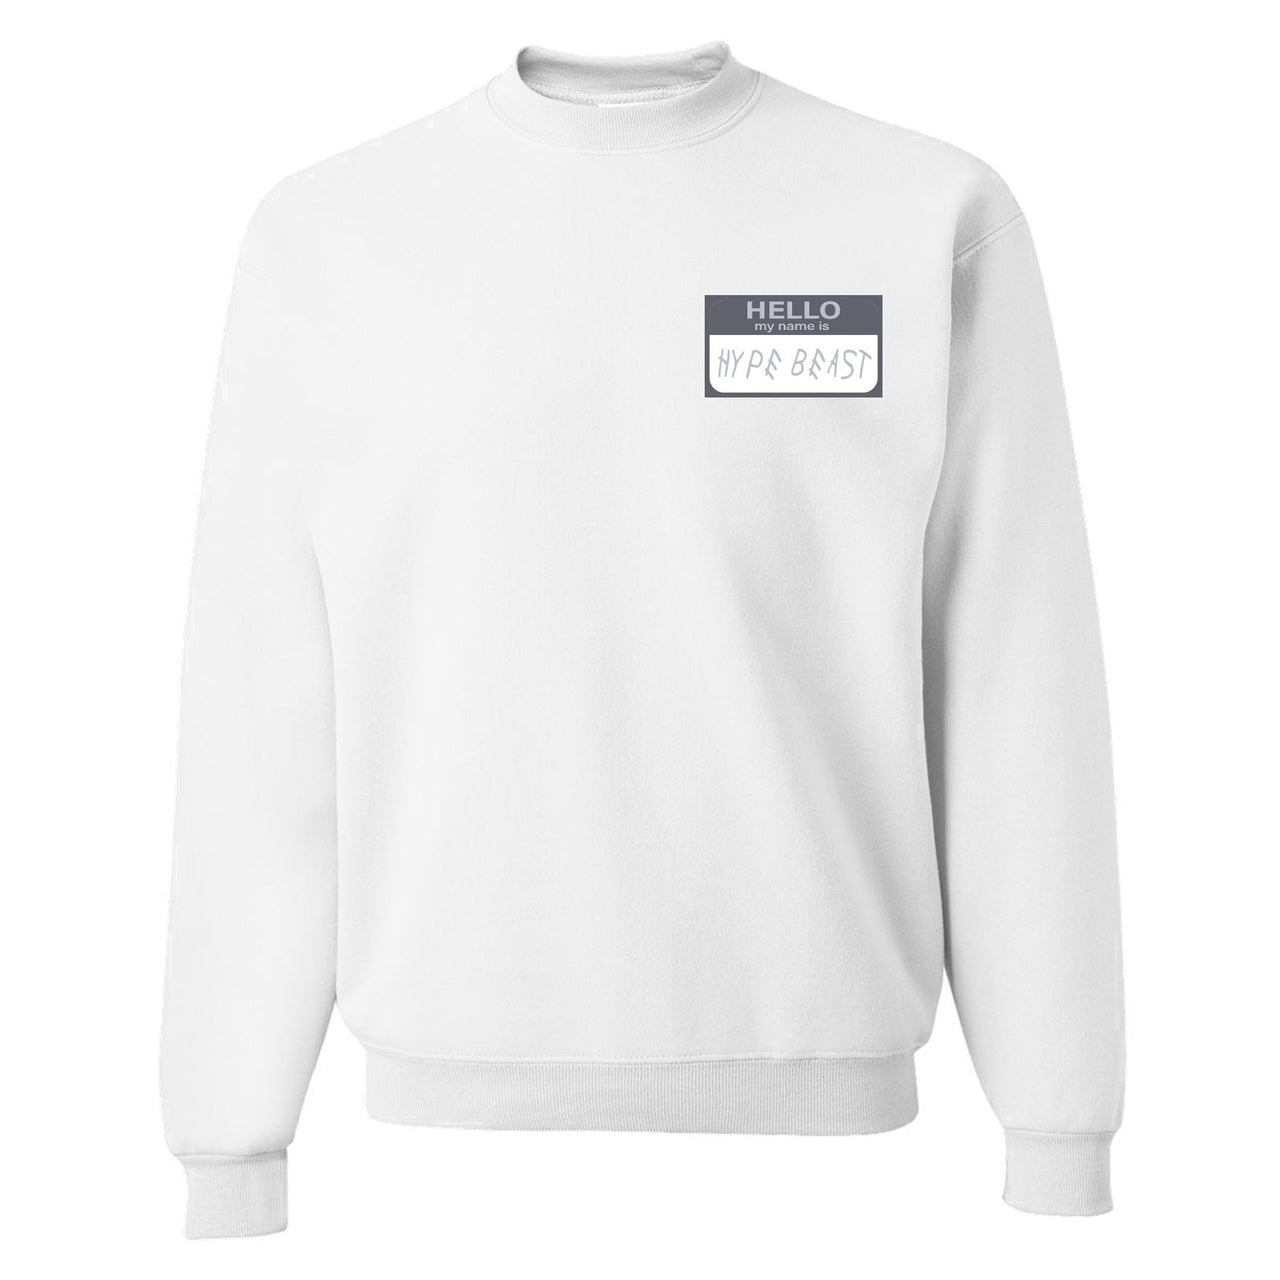 Analog 700s Crewneck Sweater | Hello My Name Is Hype Beast Woe, White